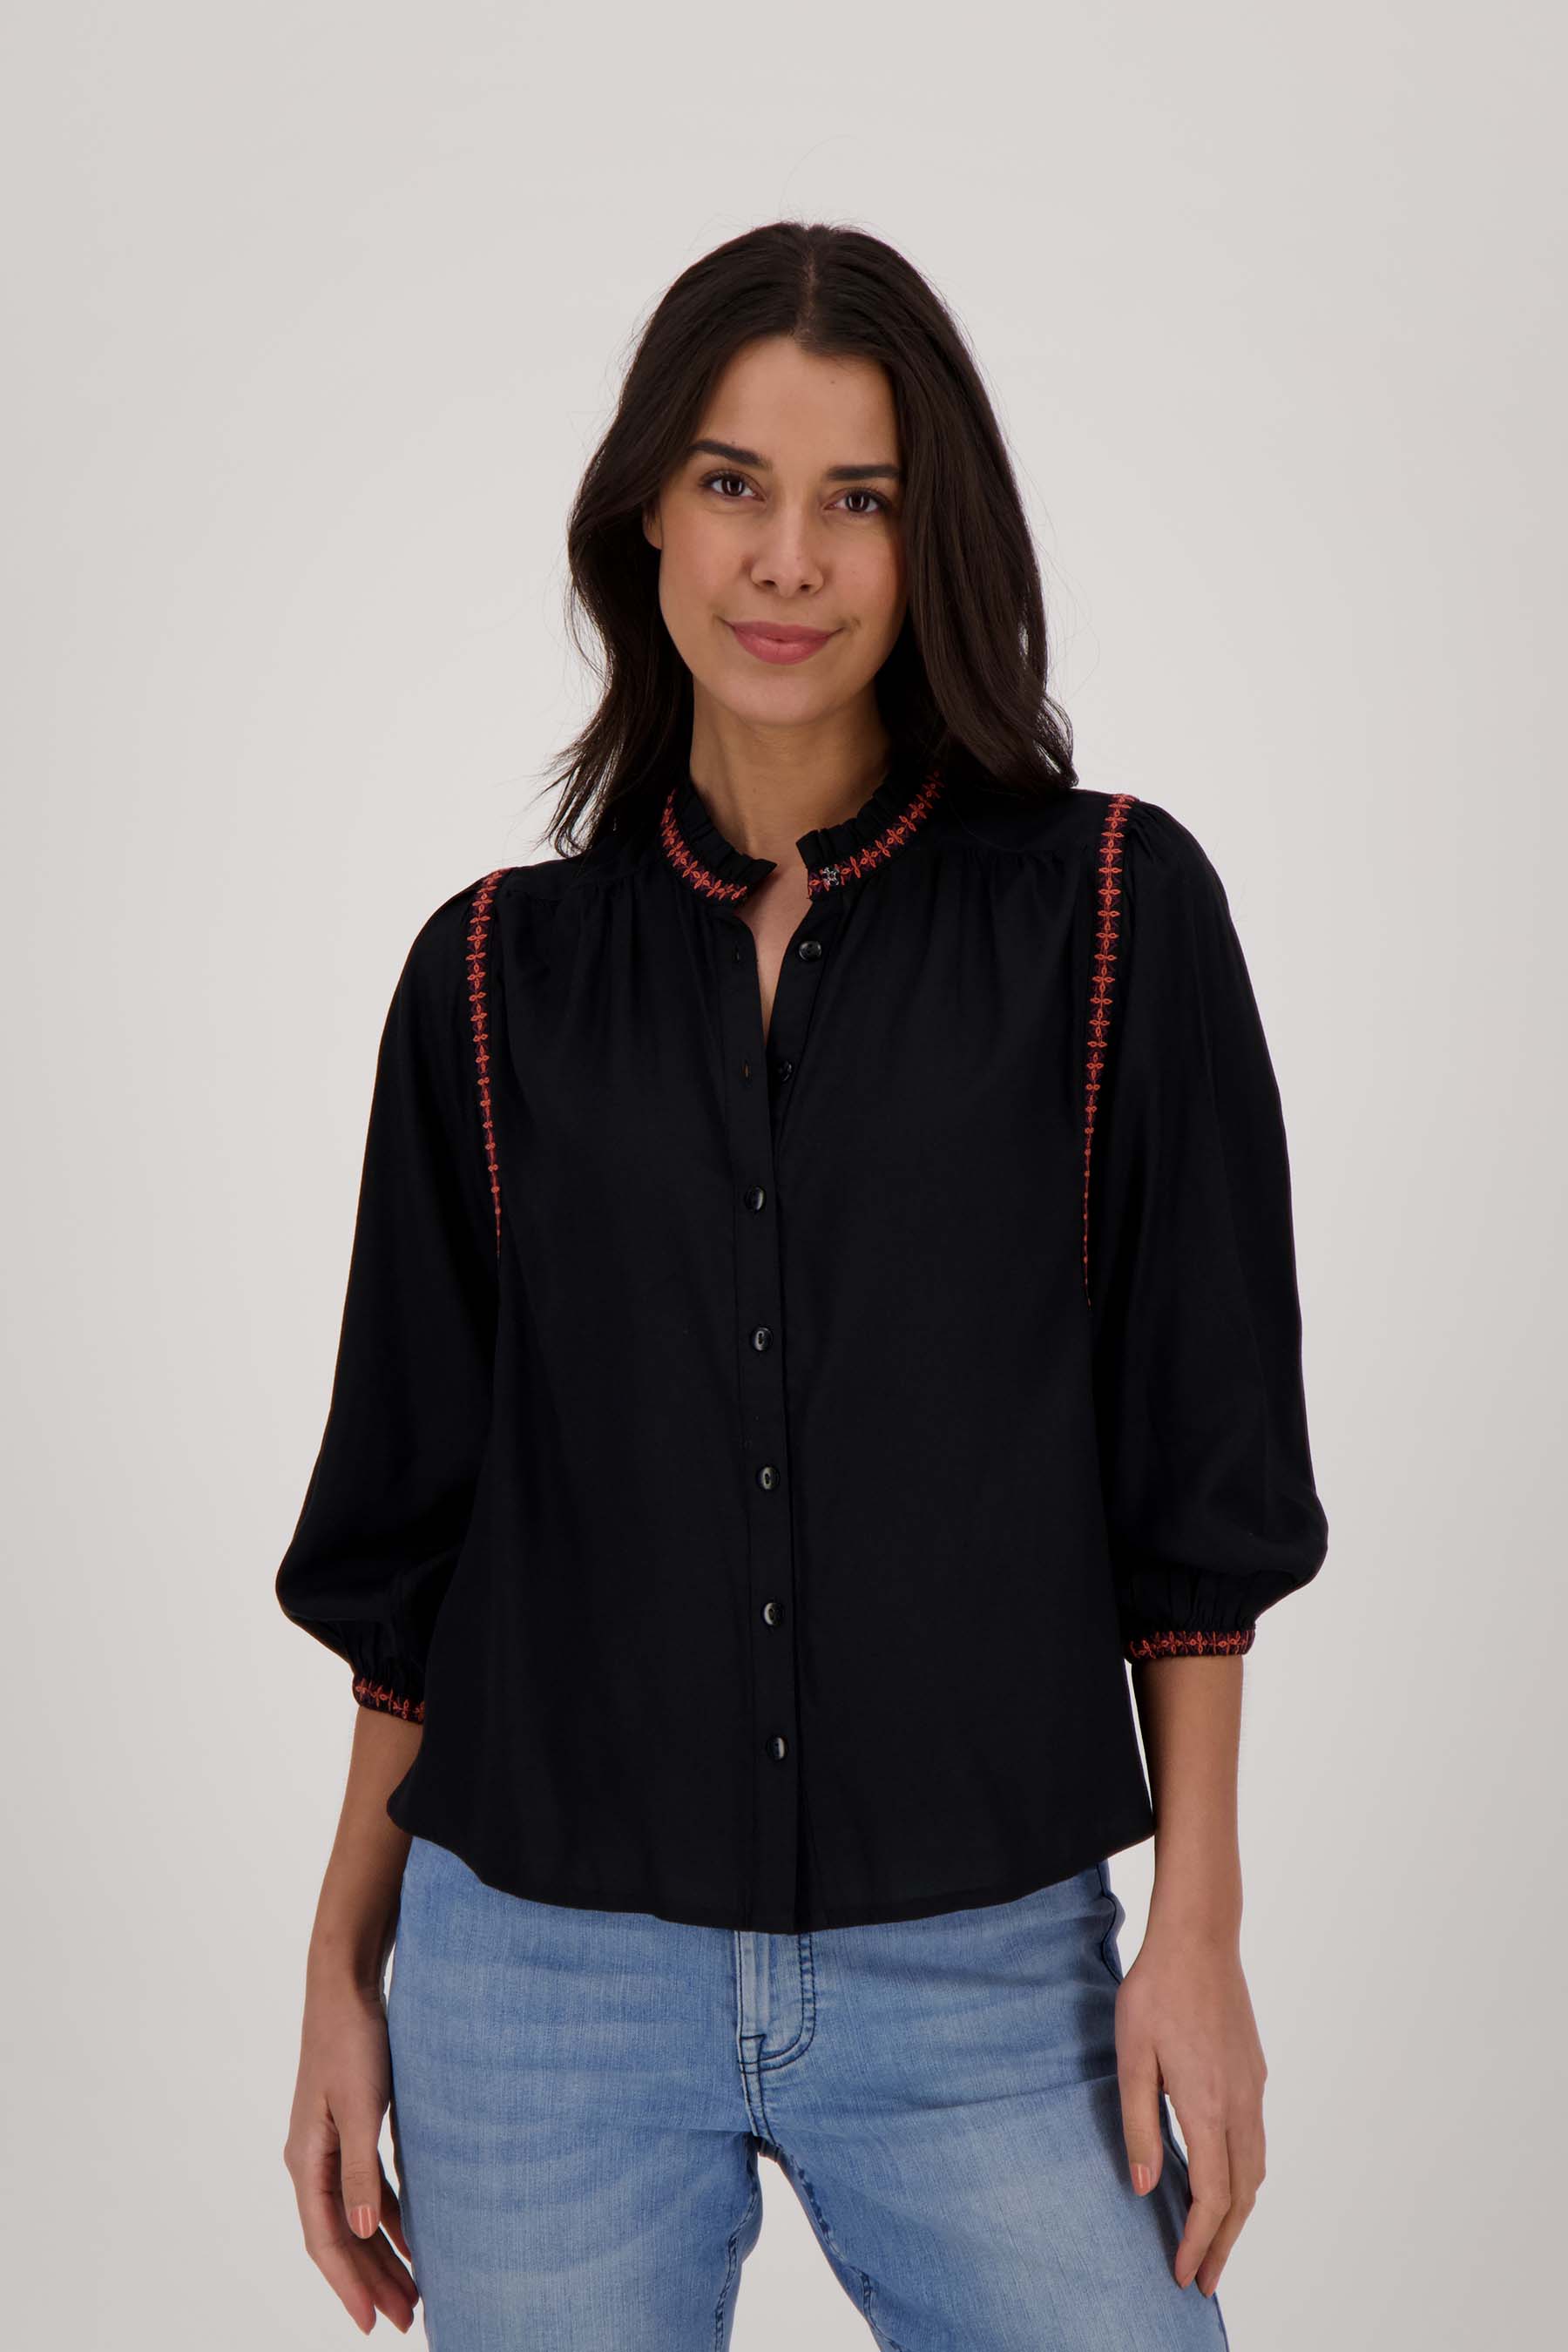 Blouse met borduursels - Zusss blouse met borduursels zwart koraalroze 0304 043 7047 model1 1 - 192